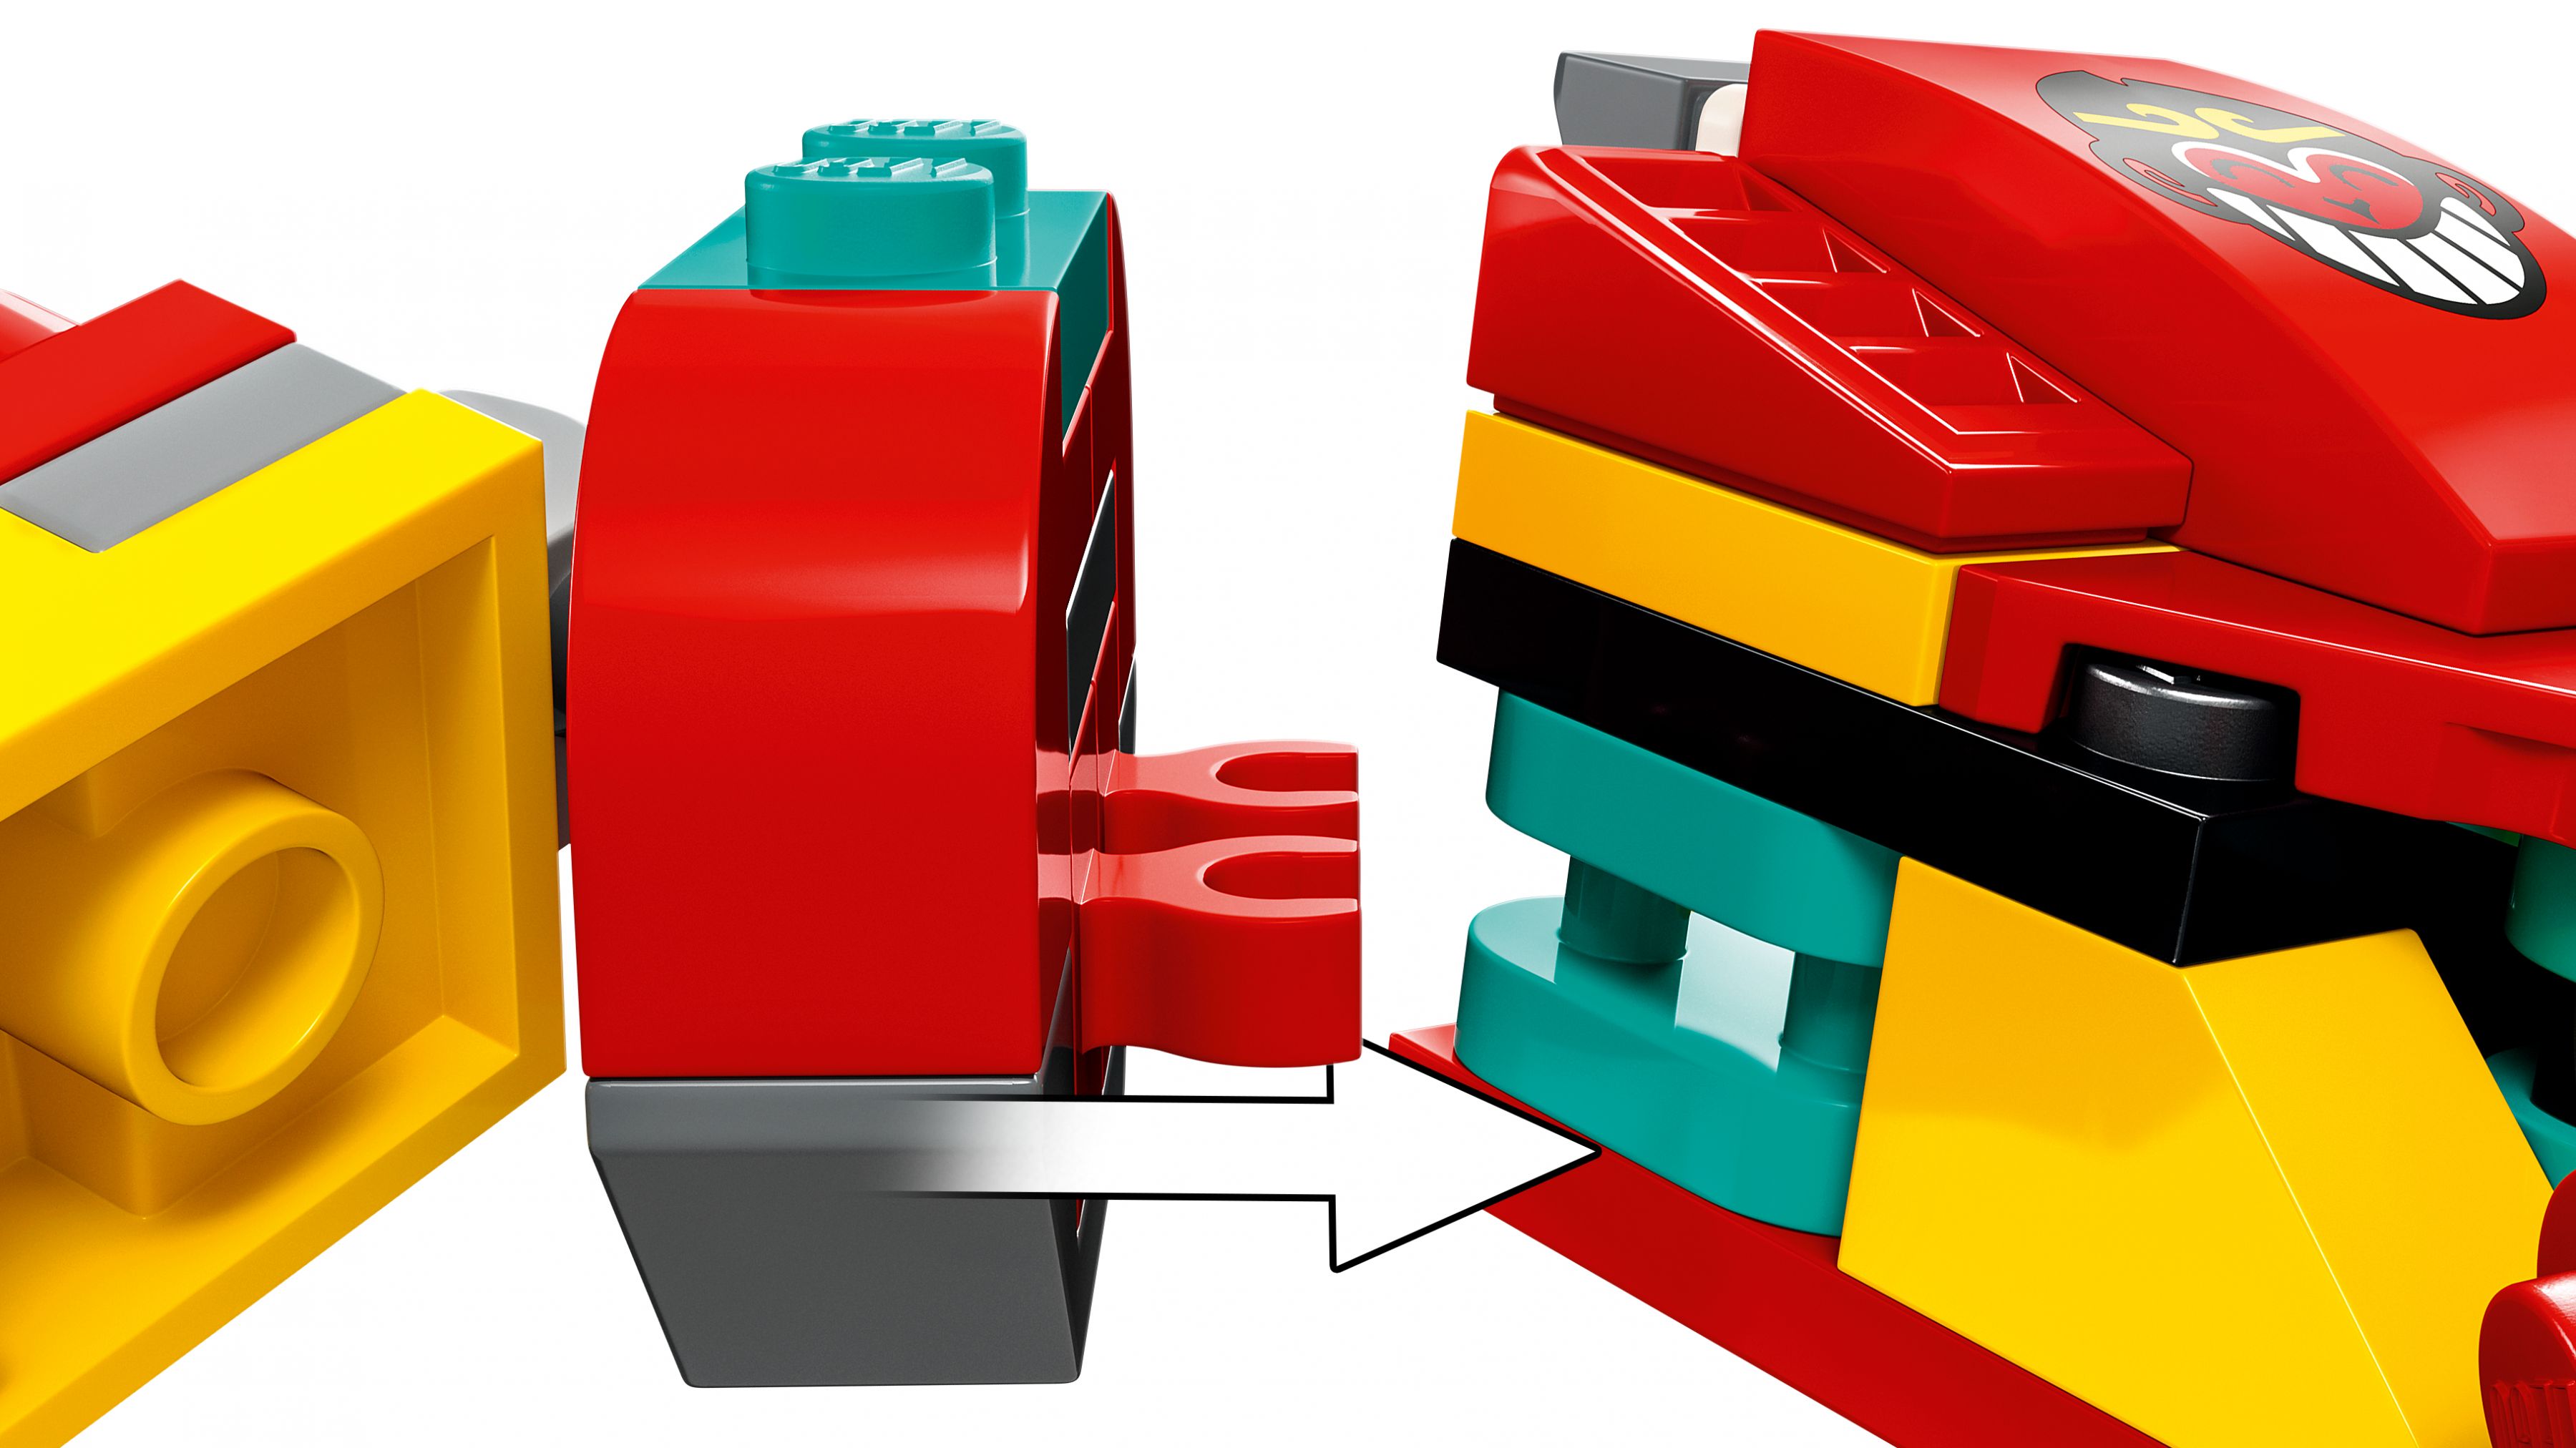 LEGO Monkie Kid 80030 Monkie Kids magische Maschinen LEGO_80030_WEB_SEC02_NOBG.jpg